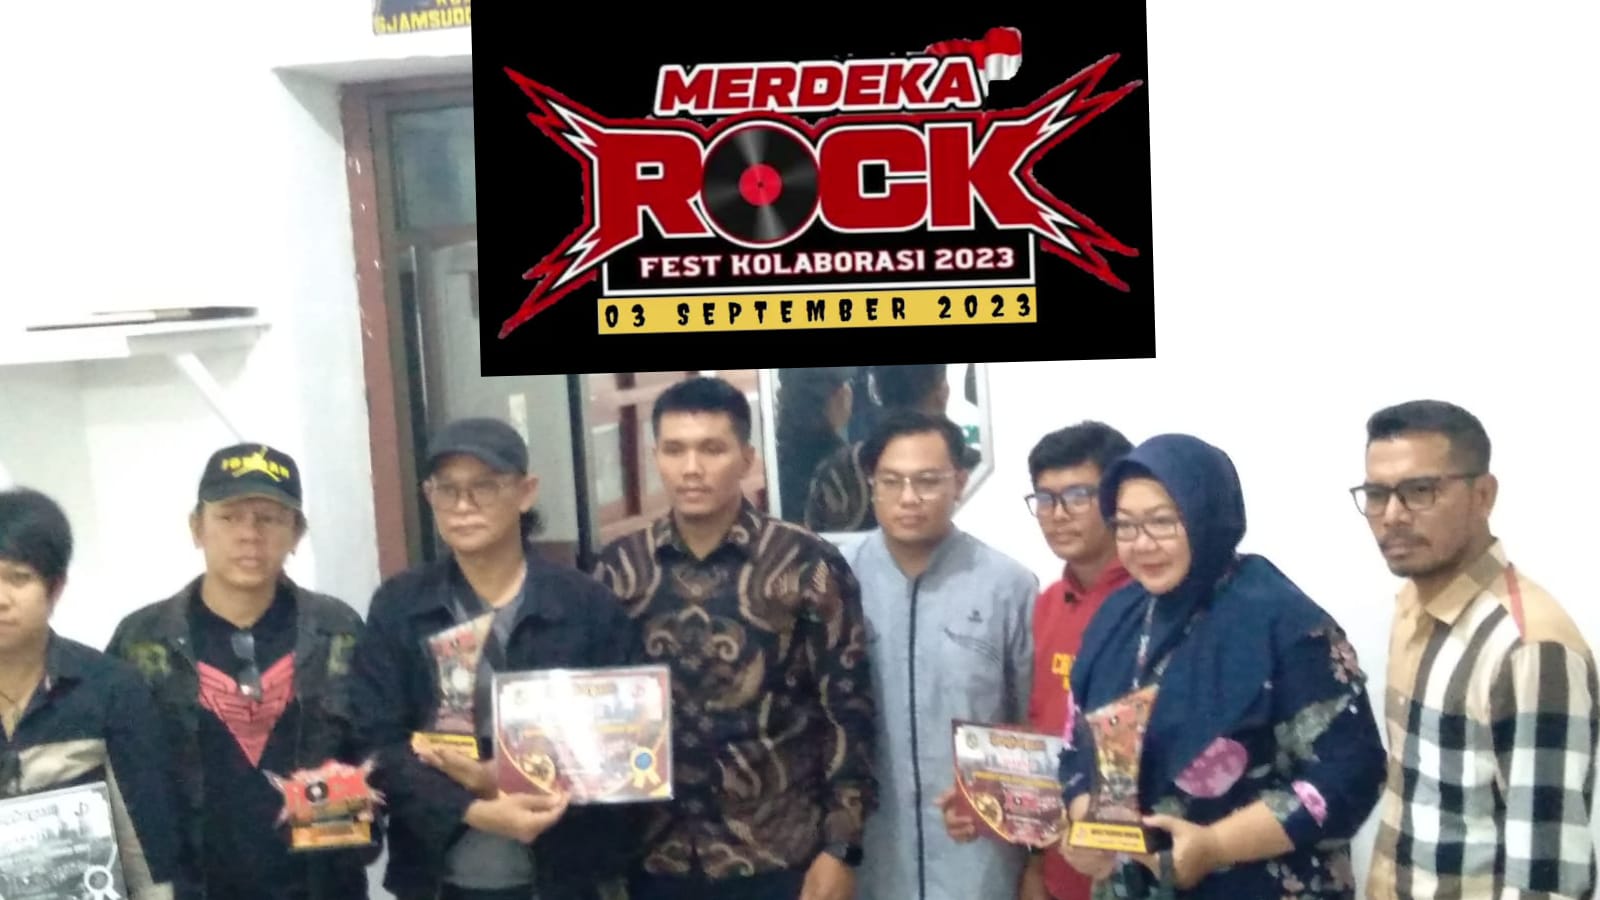 Honor Event Merdeka Rock Fest Kolaborasi 2023 Belum Dibayar, Sejumlah Musisi Datangi LBH Medan